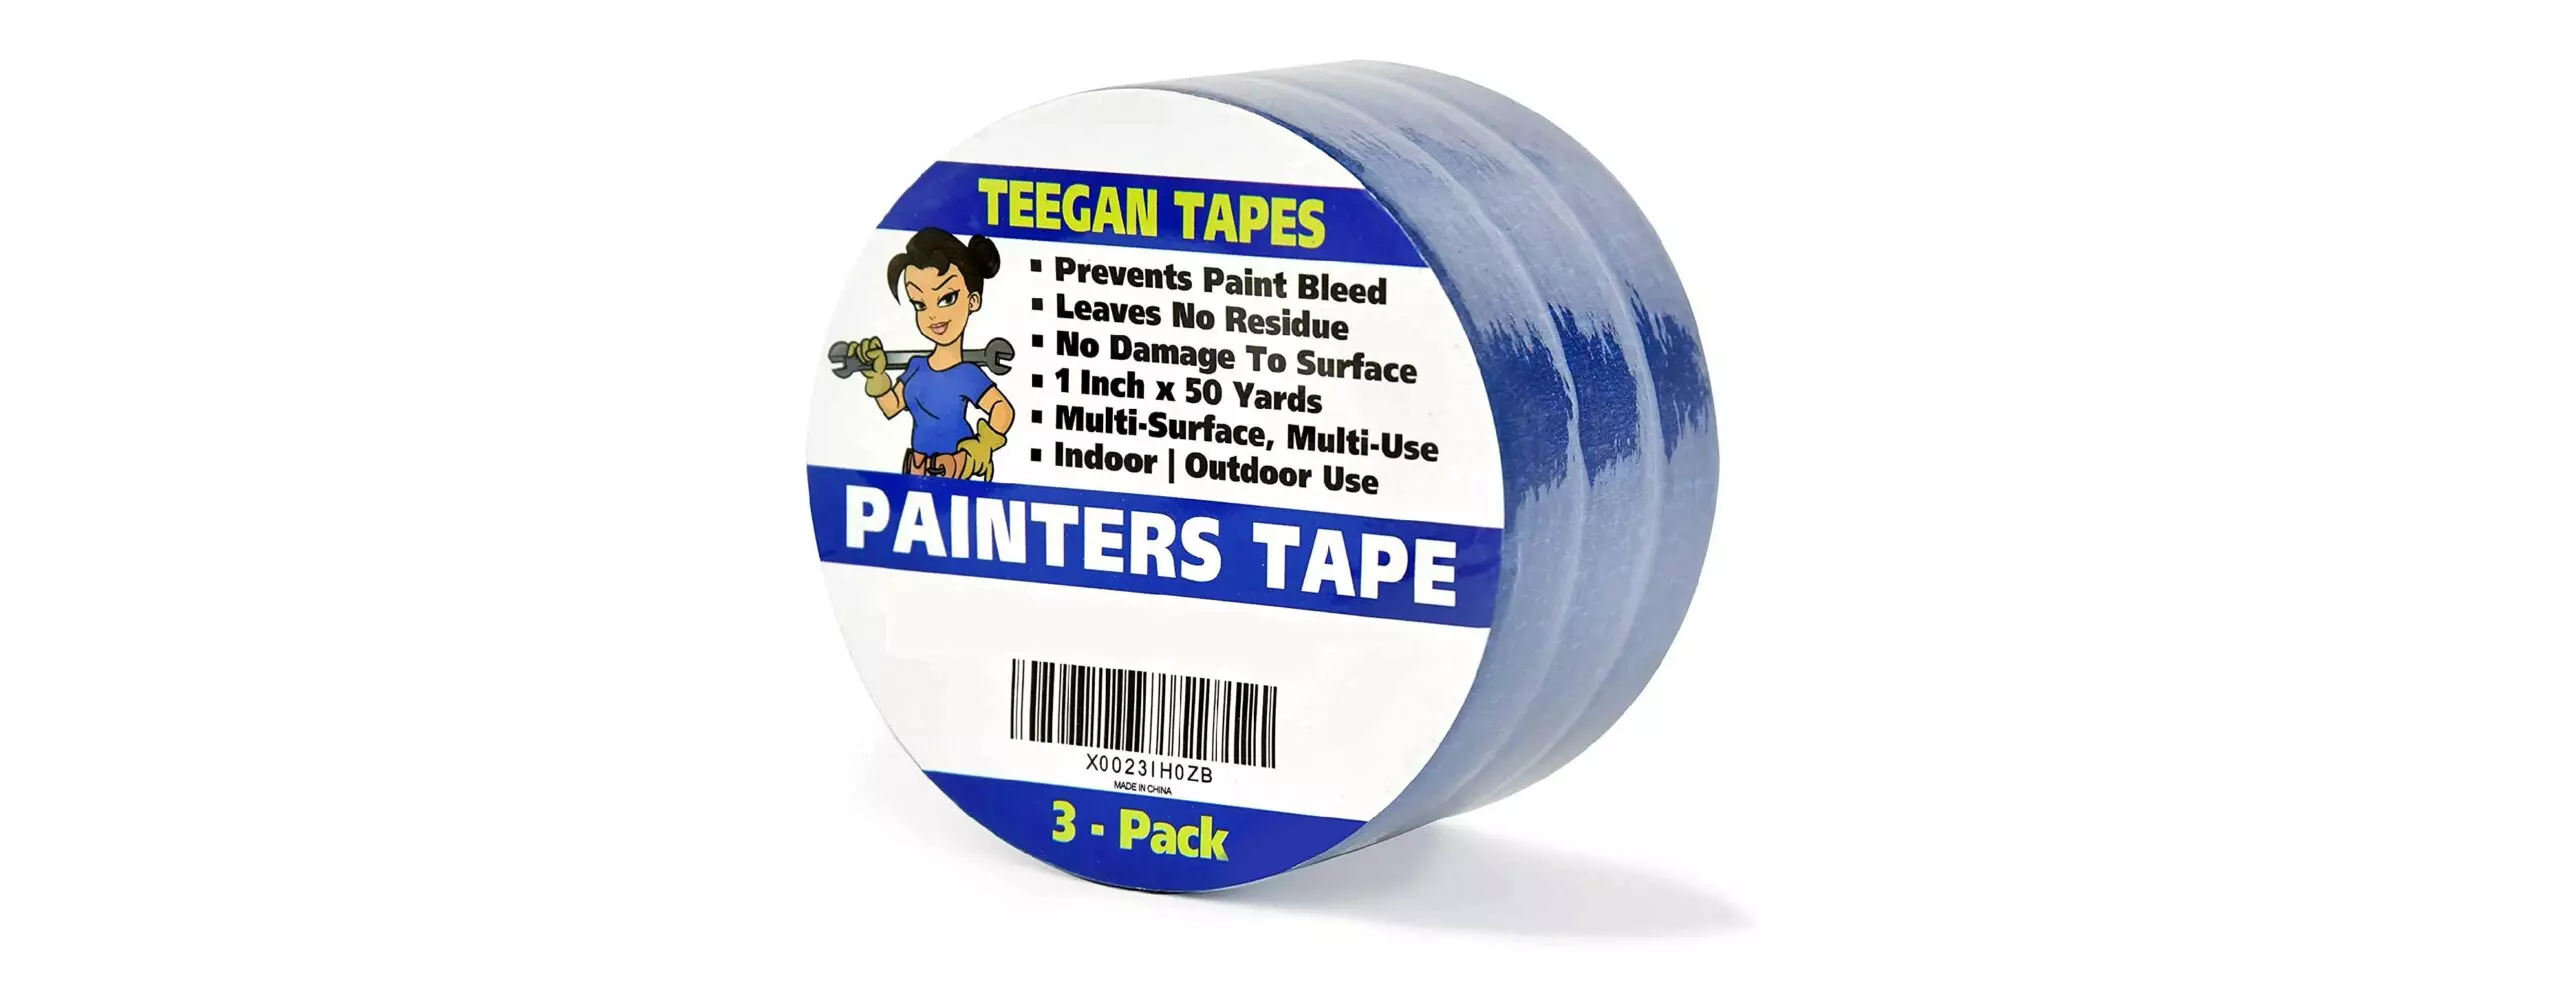 Teegan Tapes Painters Tape